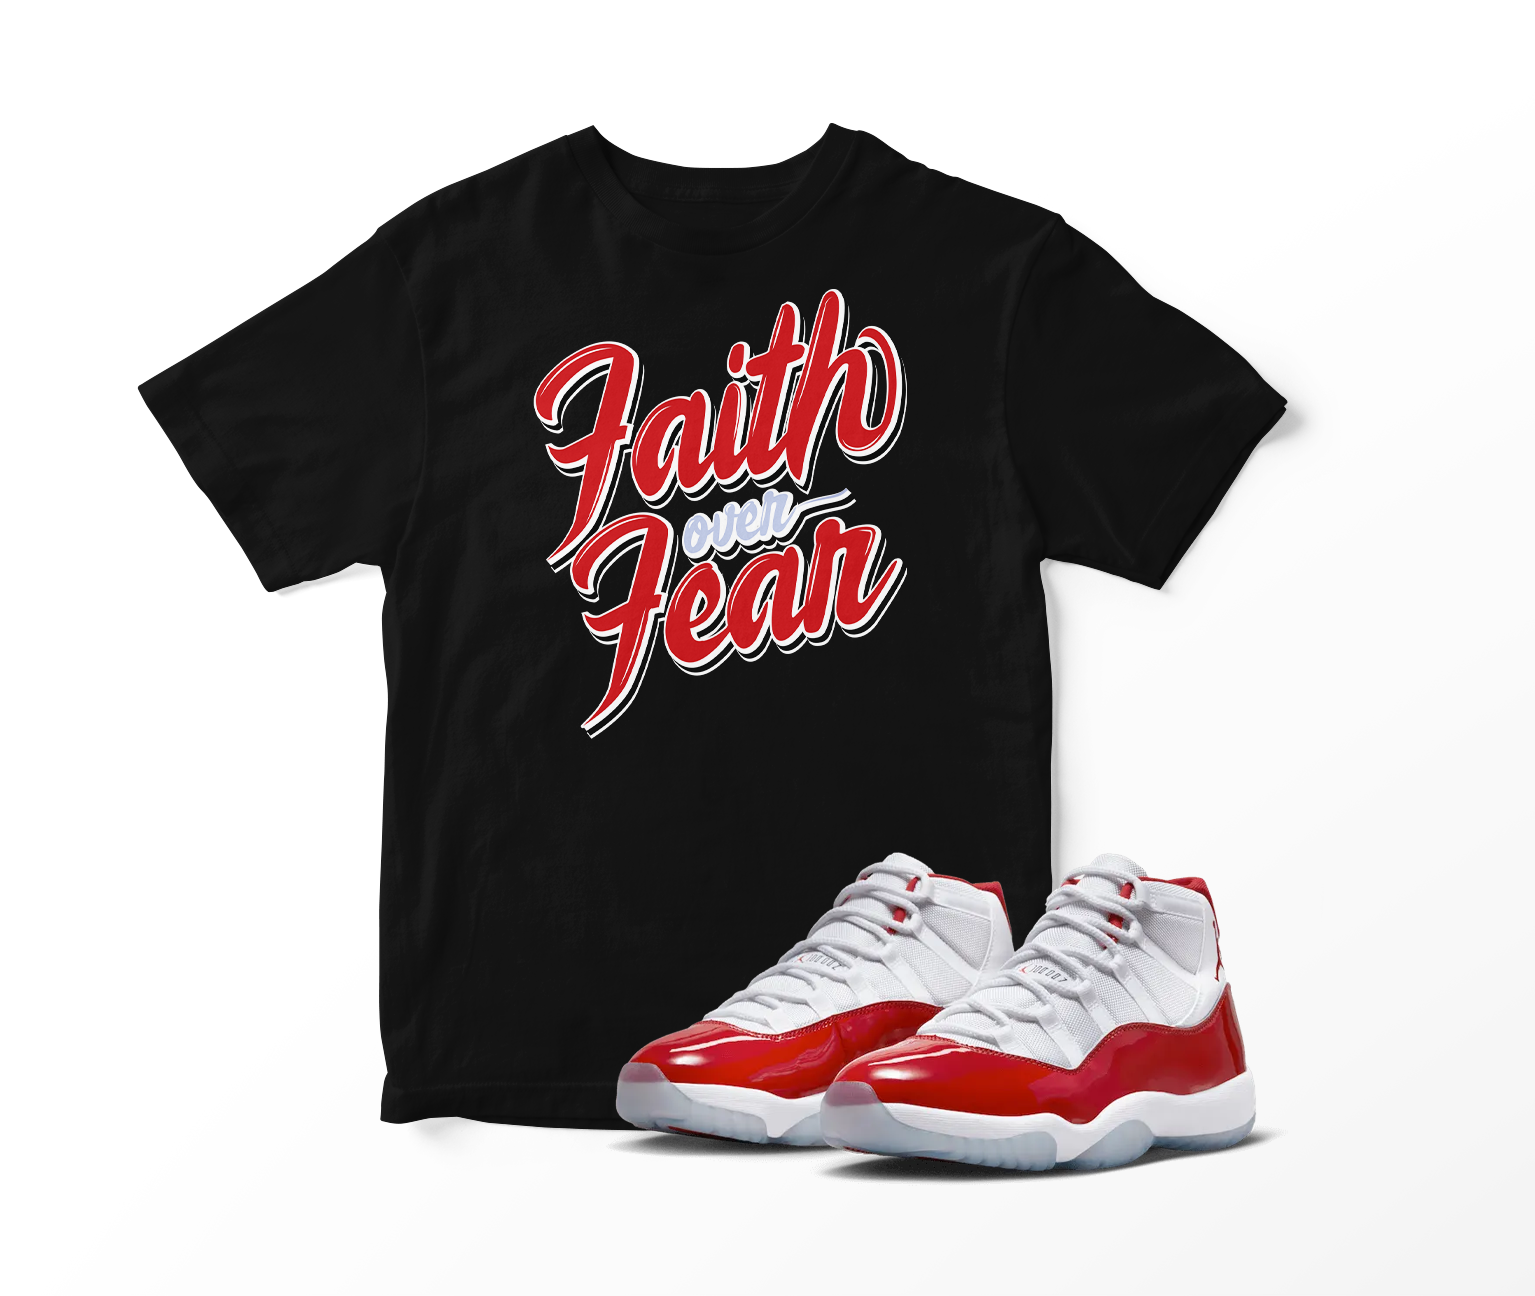 'Faith Over Fear' Custom Graphic Short Sleeve T-Shirt To Match Air Jordan 11 Cherry Red